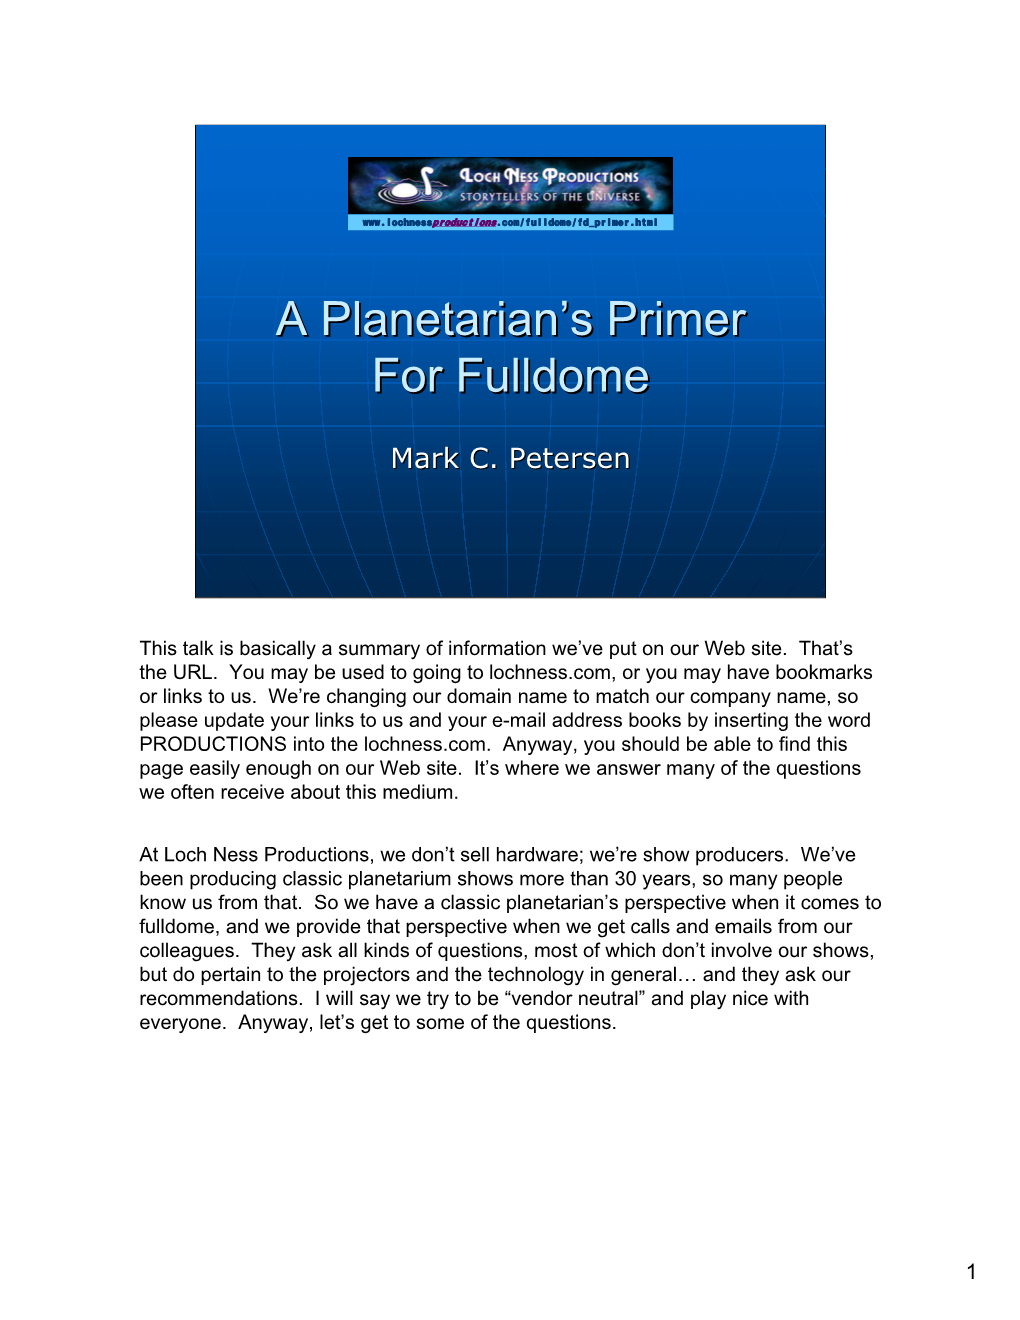 A Planetarian's Primer for Fulldome